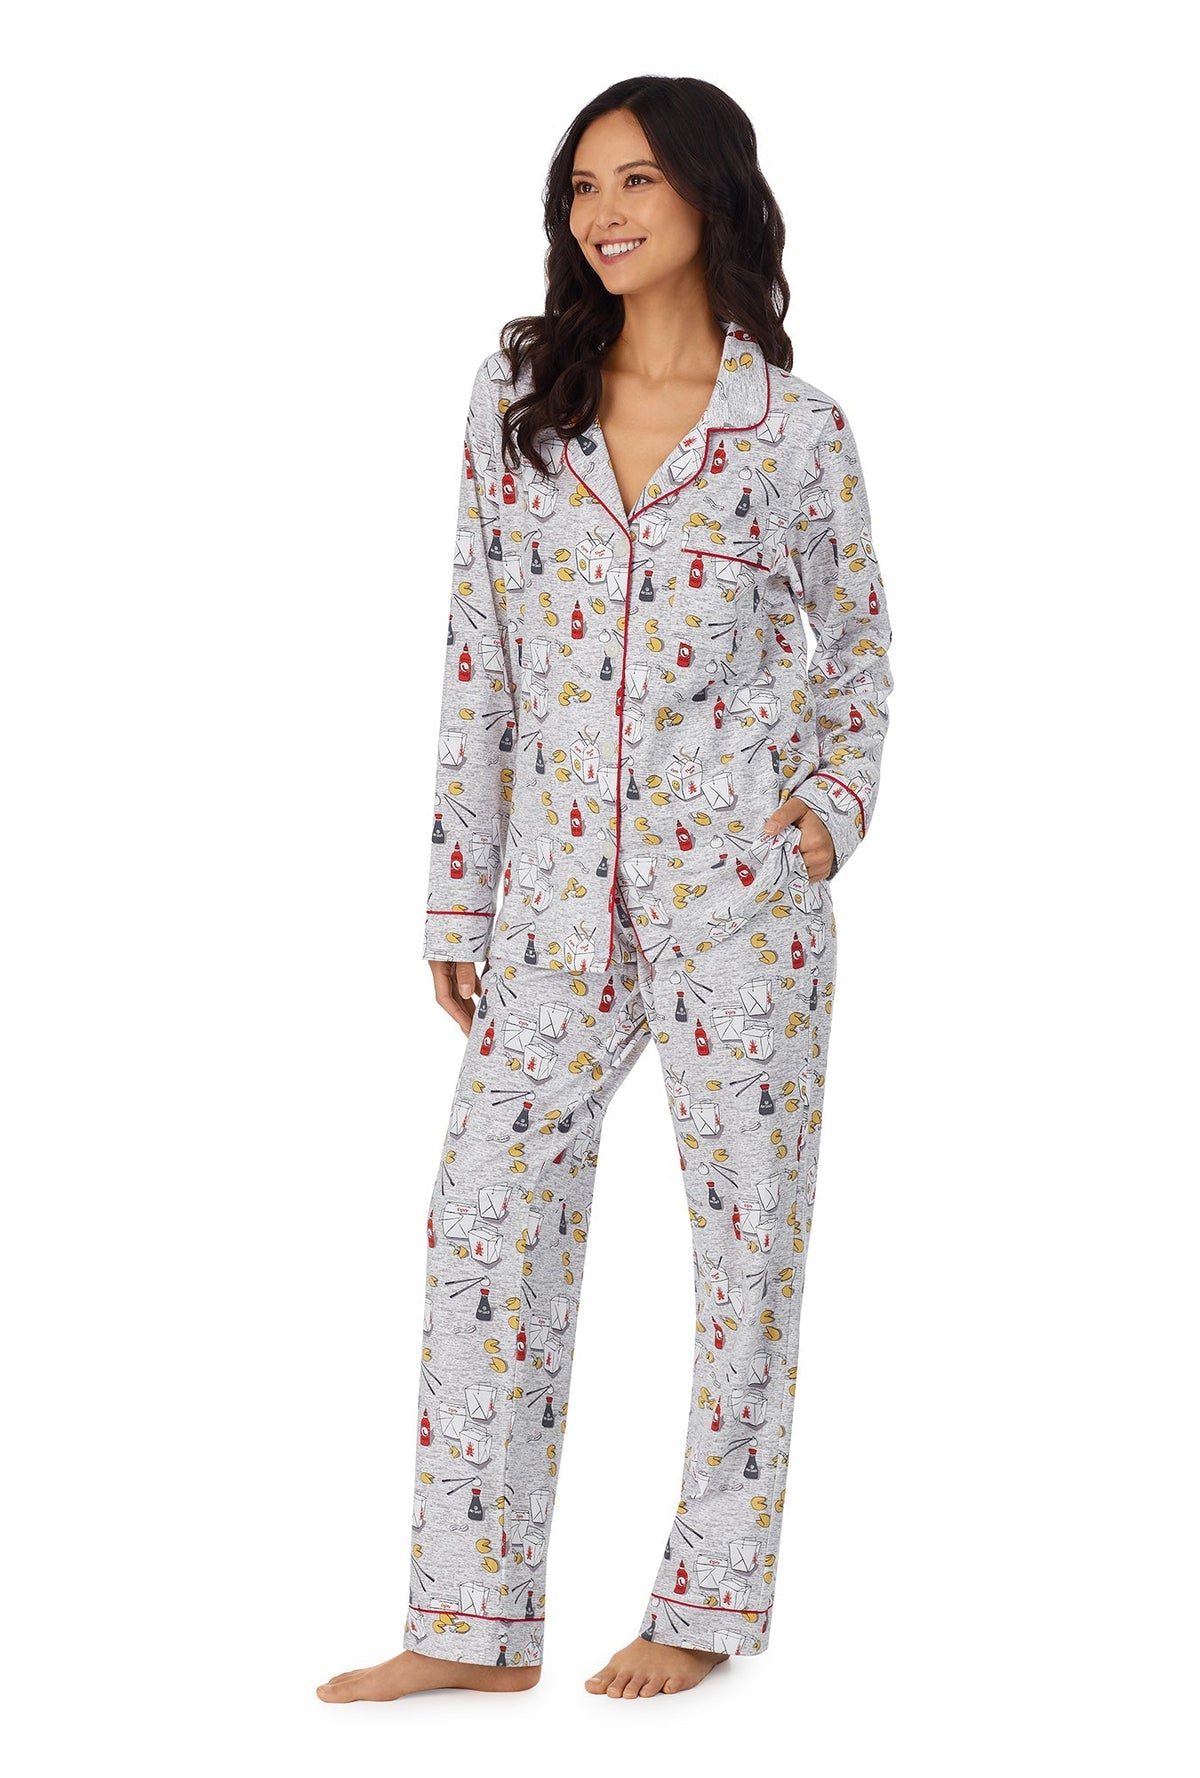 Takeout Long Sleeve Classic Stretch Jersey PJ Set - Bedhead Pajamas